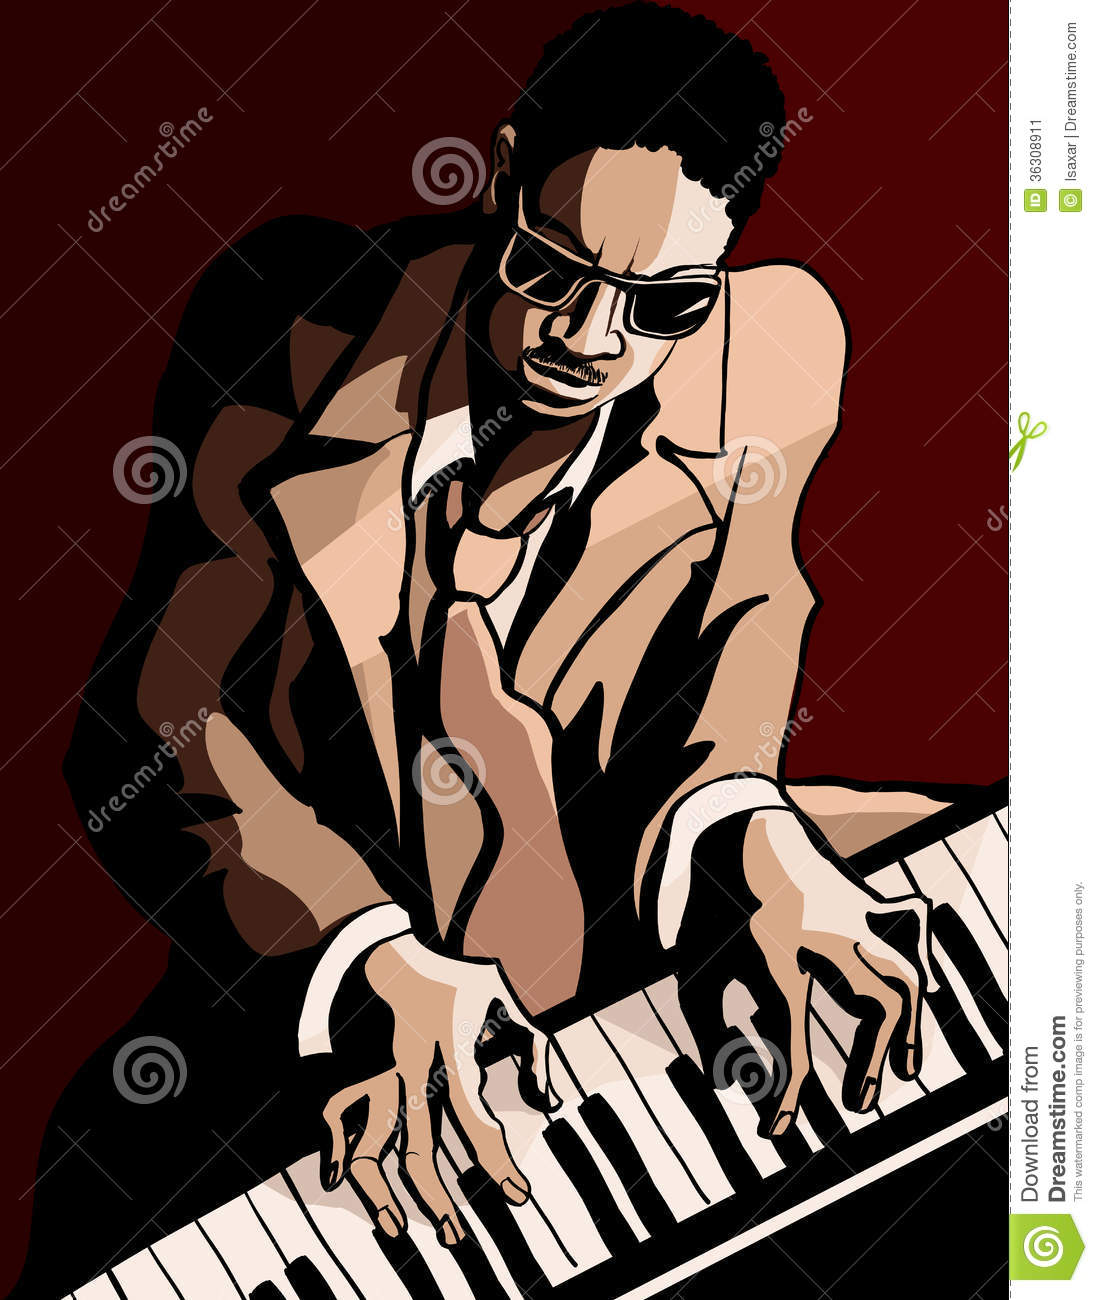 Afro American Jazz Pianist Stock Image   Image  36308911